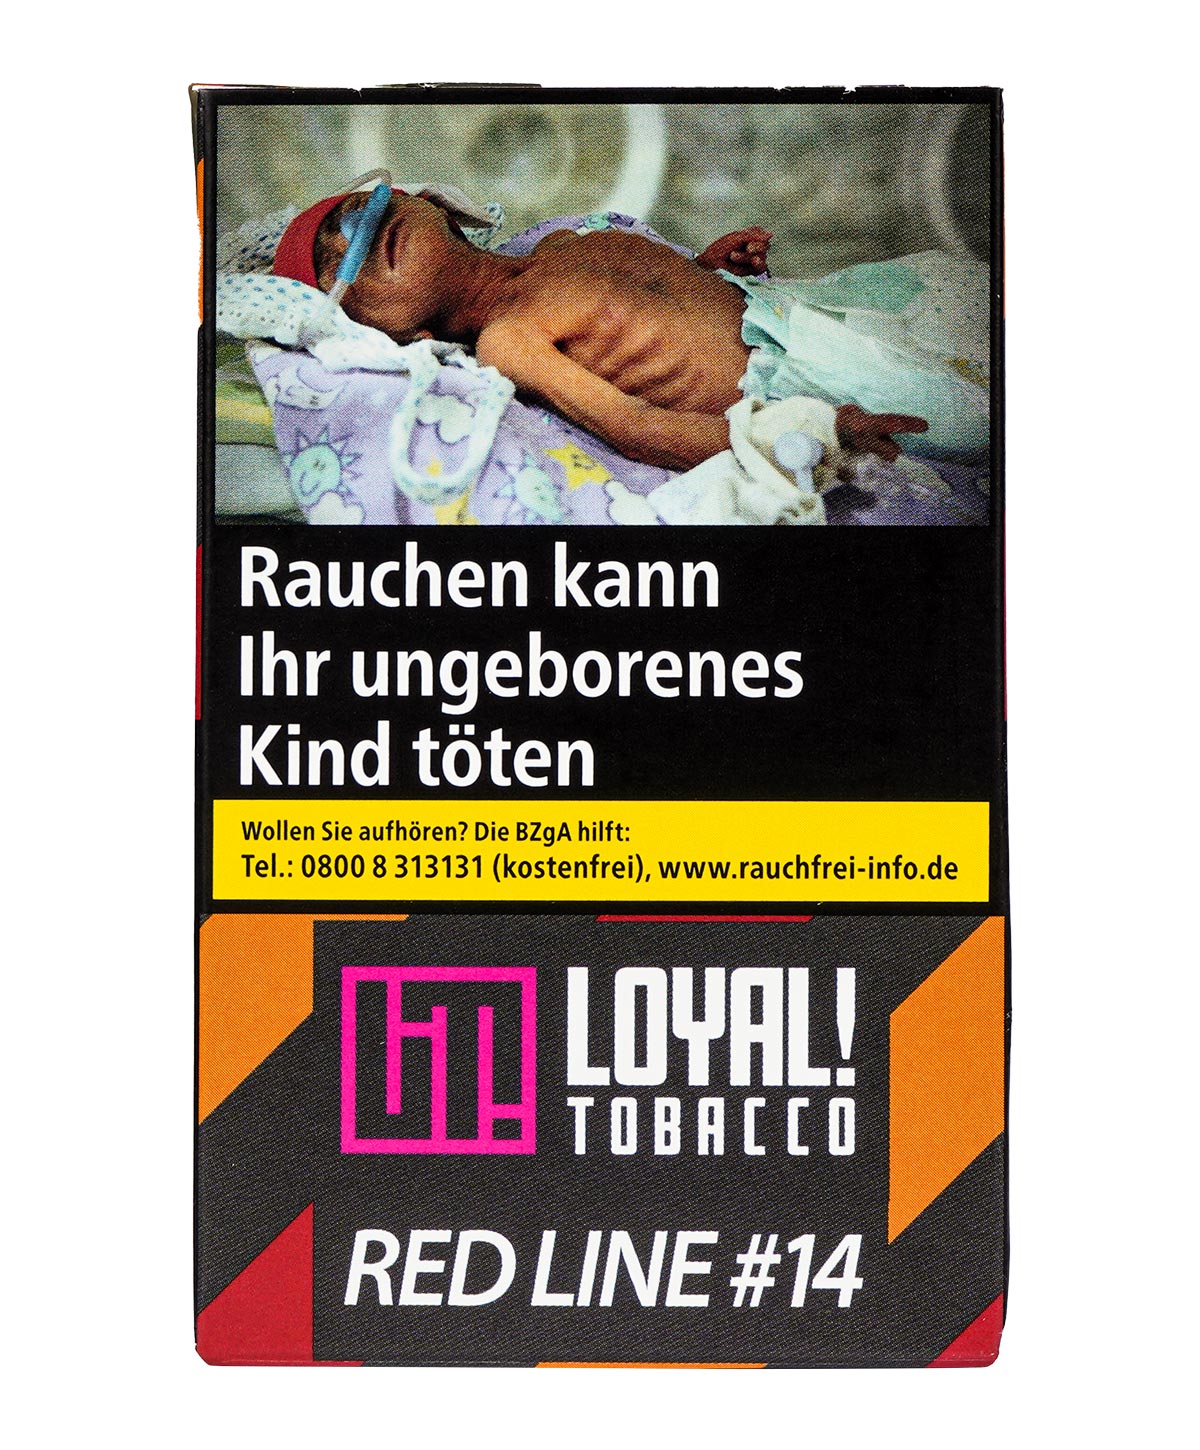 Loyal Tobacco Red Line #14 25g